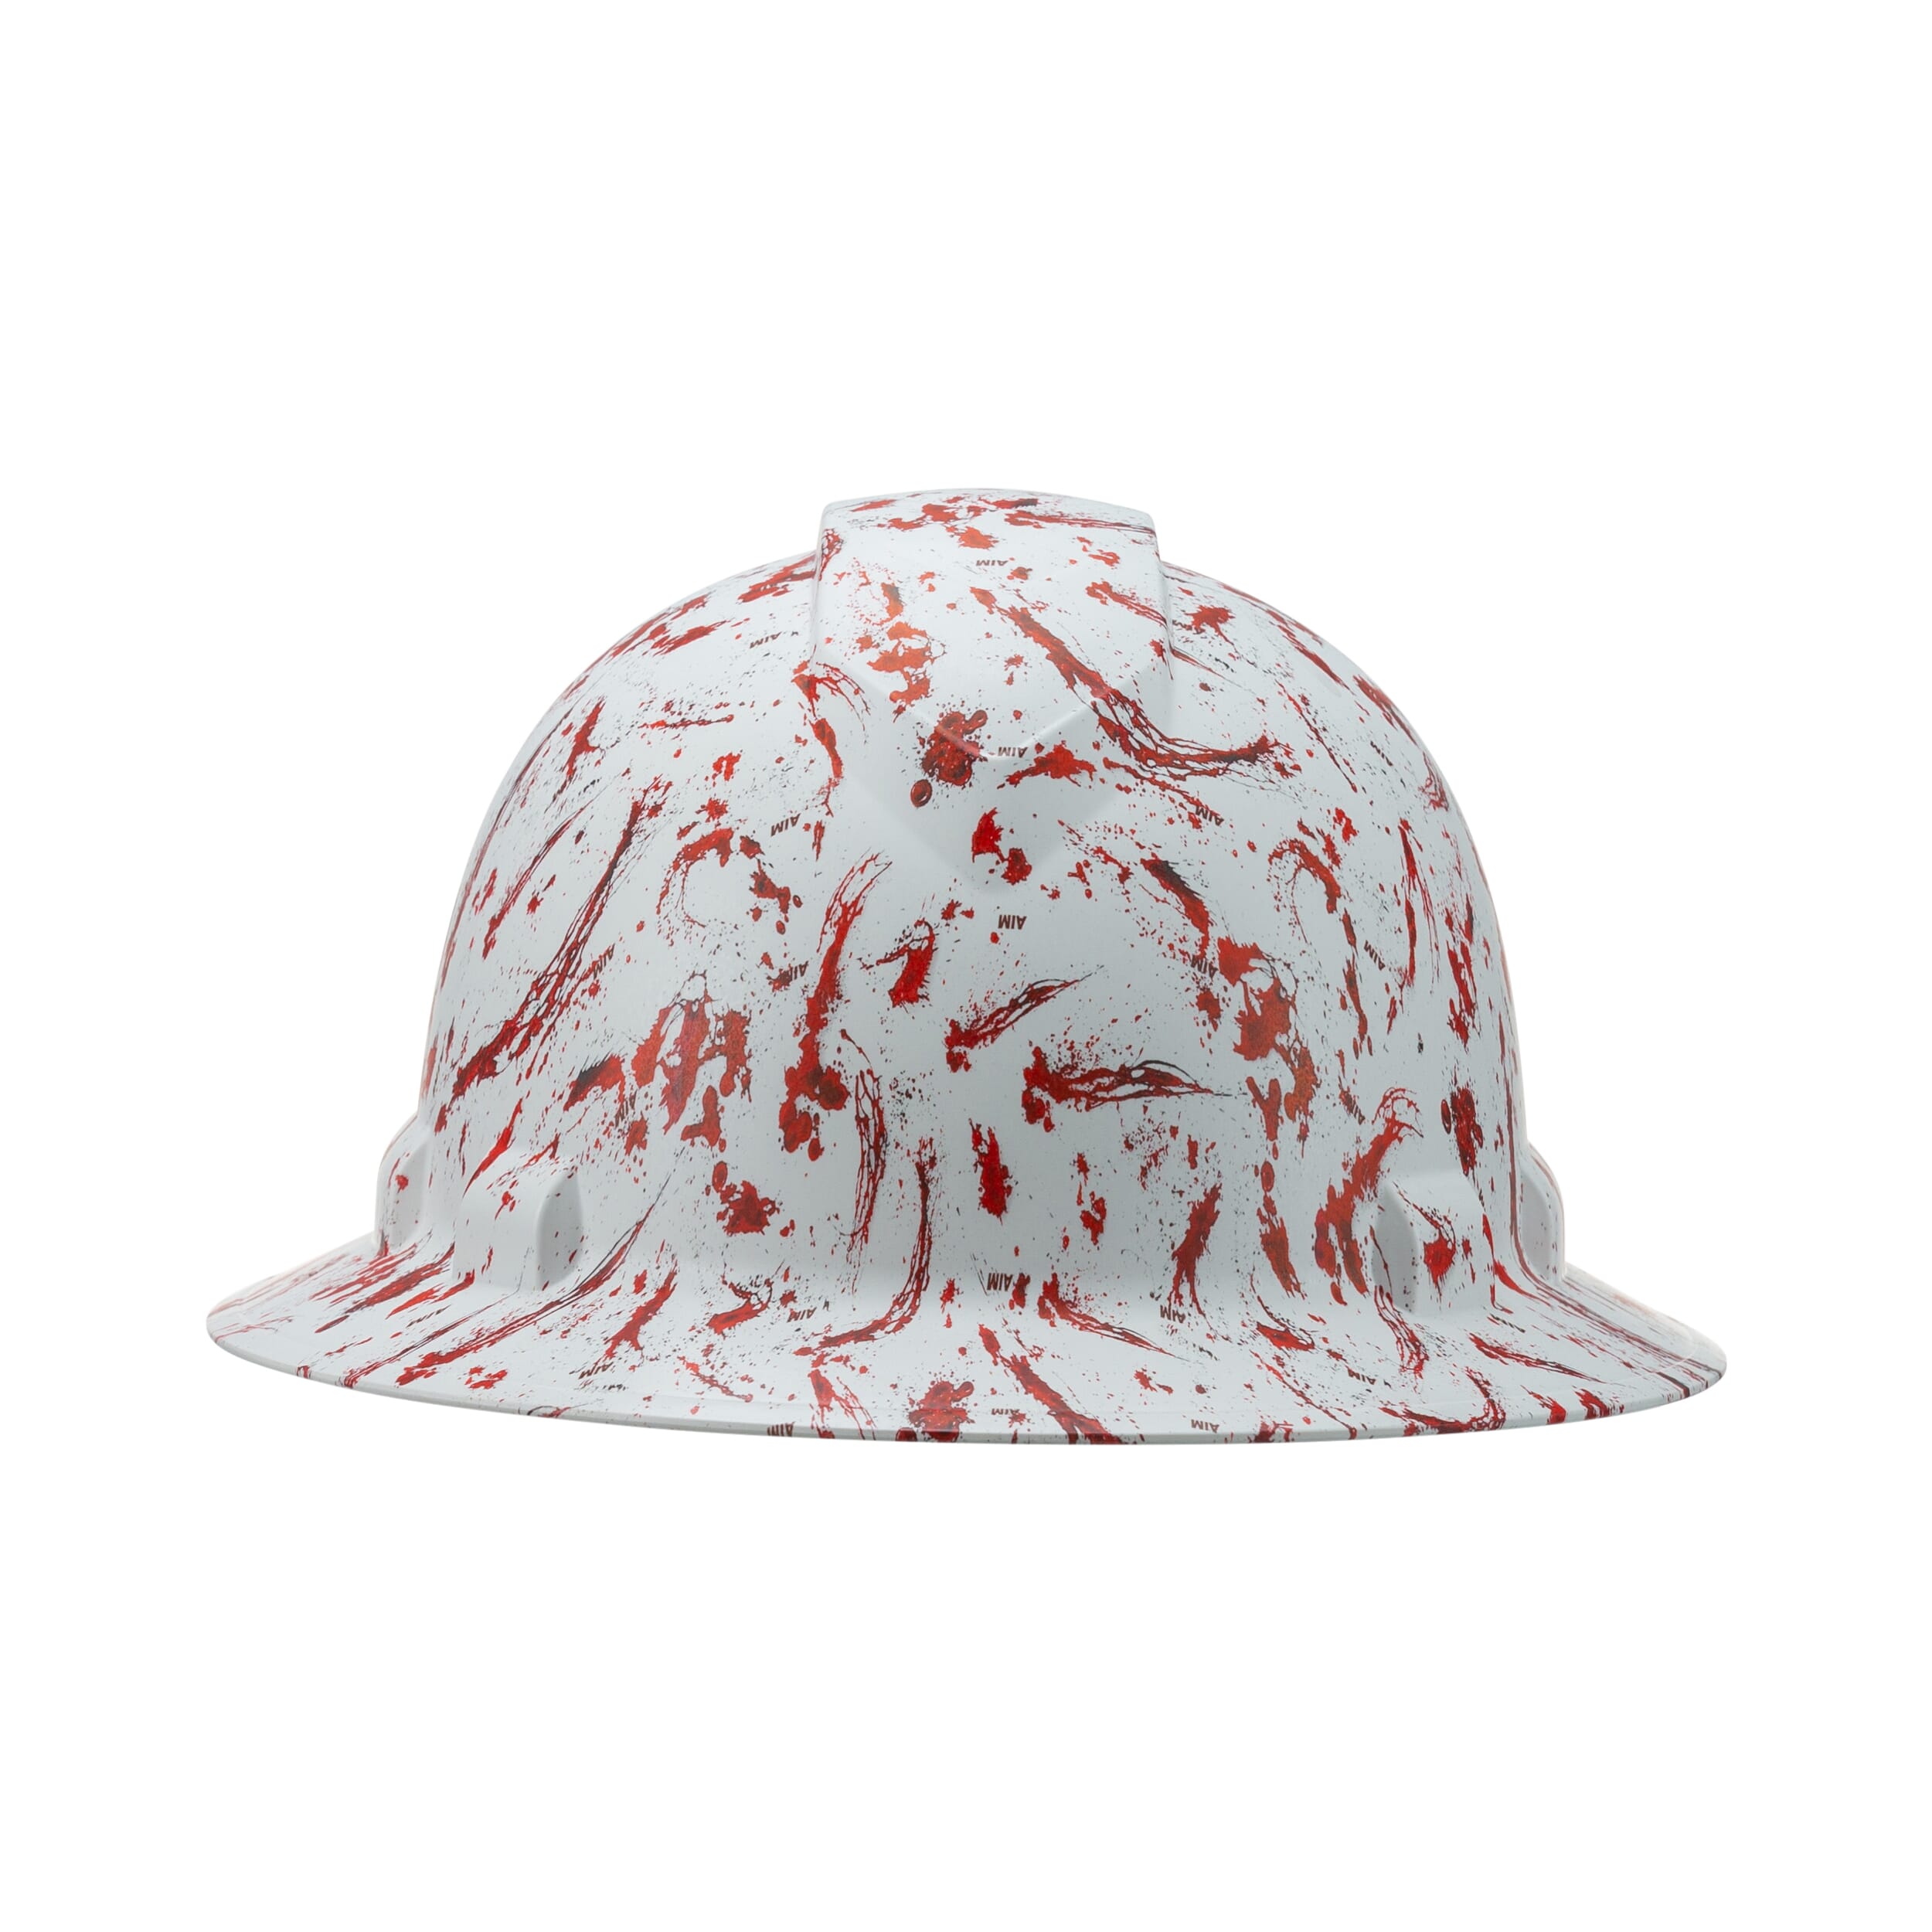 Full Brim Pyramex Hard Hat, Custom Paint Splash Design, Safety Helmet, 6 Point